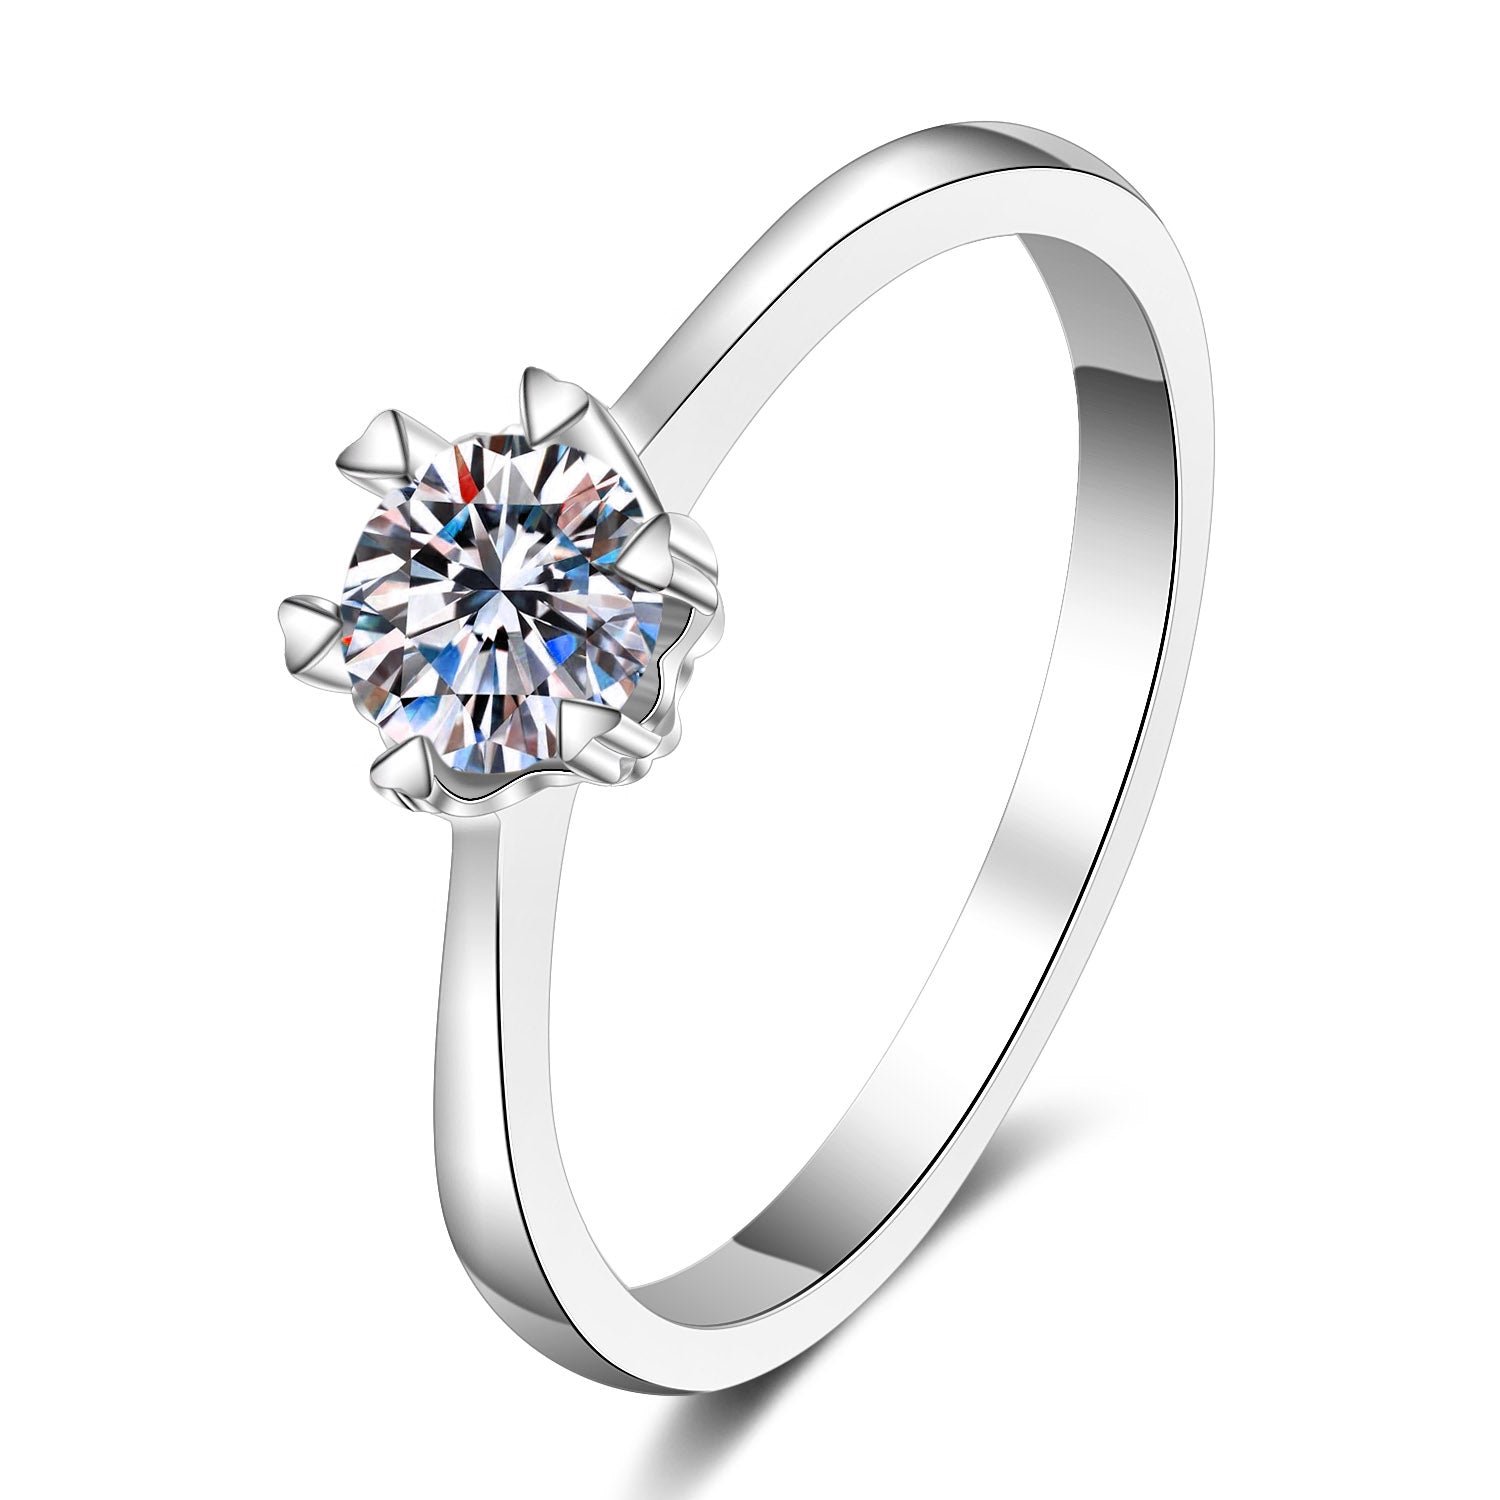 2 CT MOISSANITE Diamond Engagement solitaire  Ring, 925 Silver, PT950, wedding ring, Platinum Plated, Passes Diamond Tester Xaxe.com